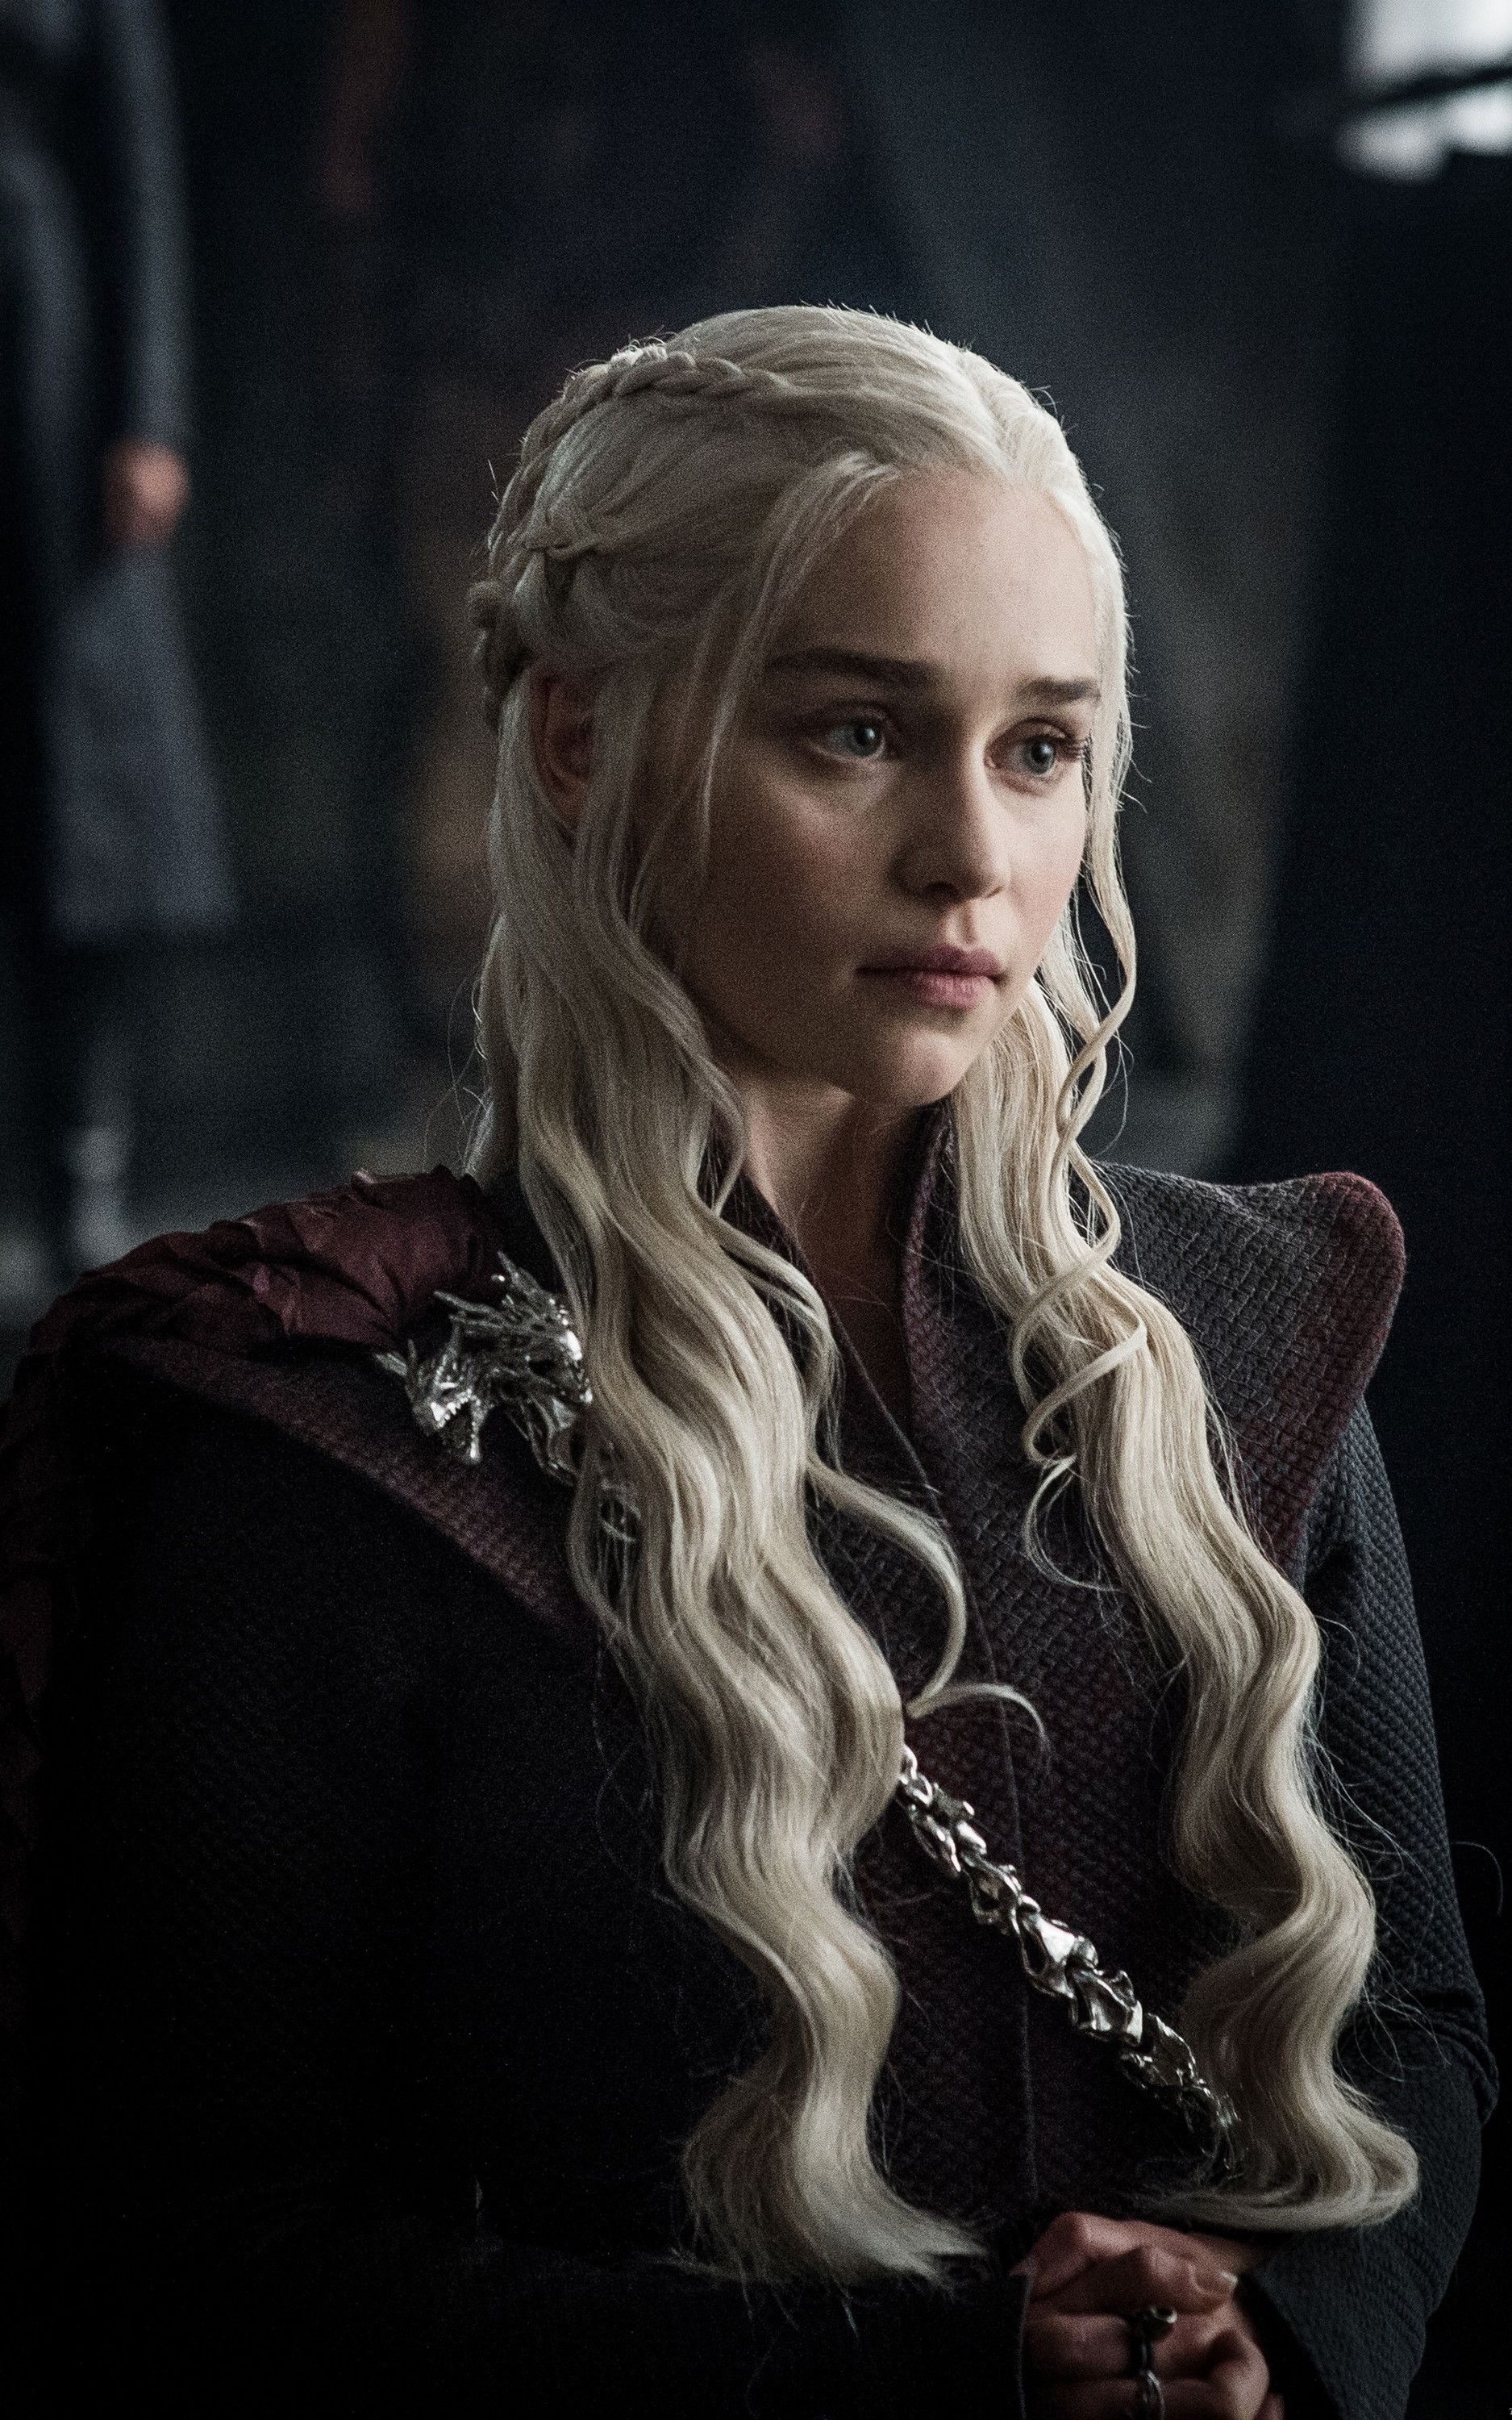 Download Game Of Thrones Khaleesi Wallpaper Top By Janetscott Emilia Clarke Game Of Thrones